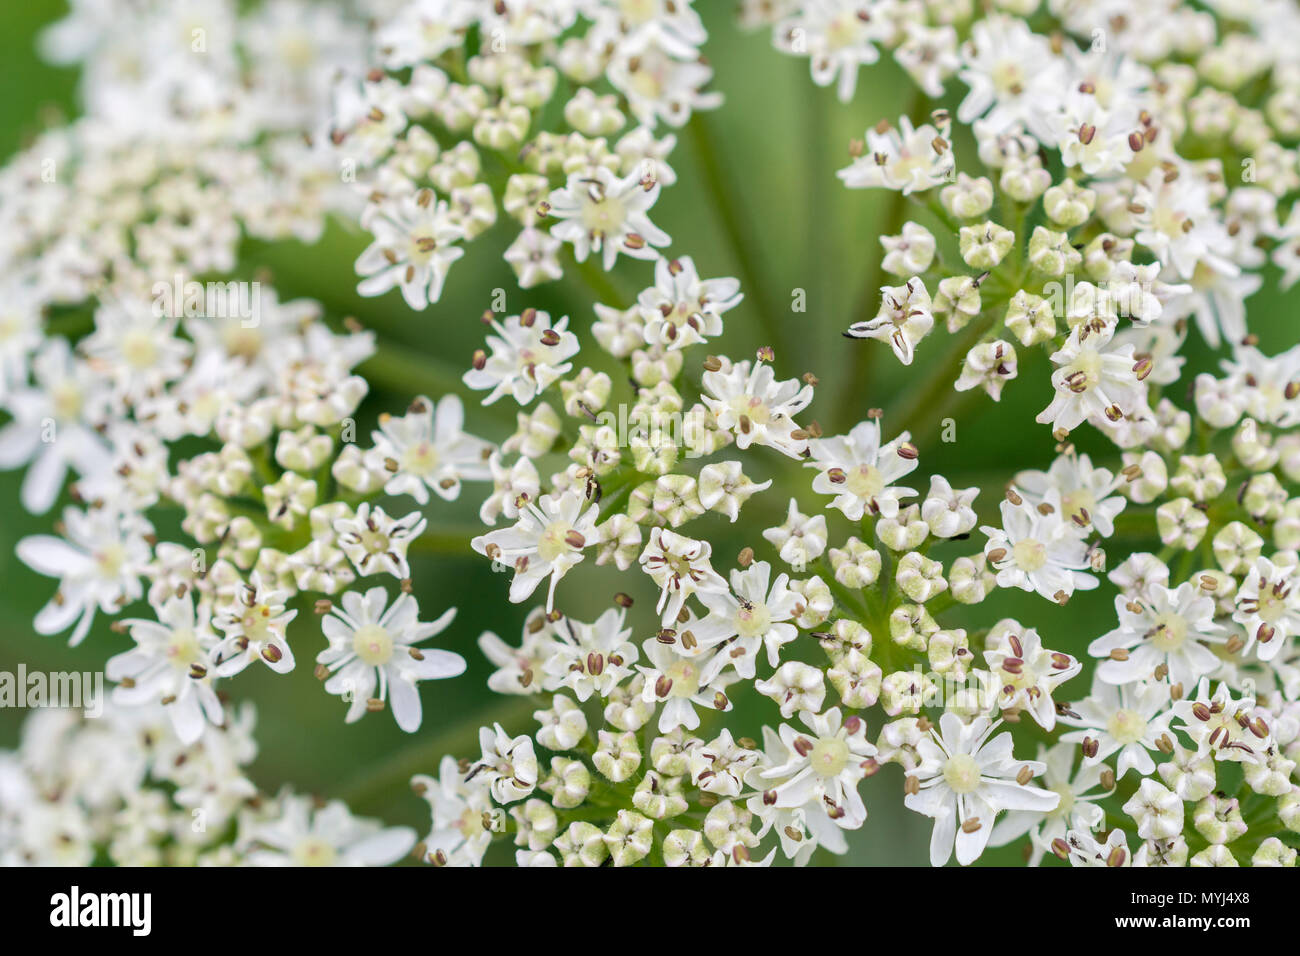 Hogweed / Cow Parsnip - Macro photo of flowers of common umbellifer Hogweed / Heracleum sphondylium. Cow parsley family. Stock Photo